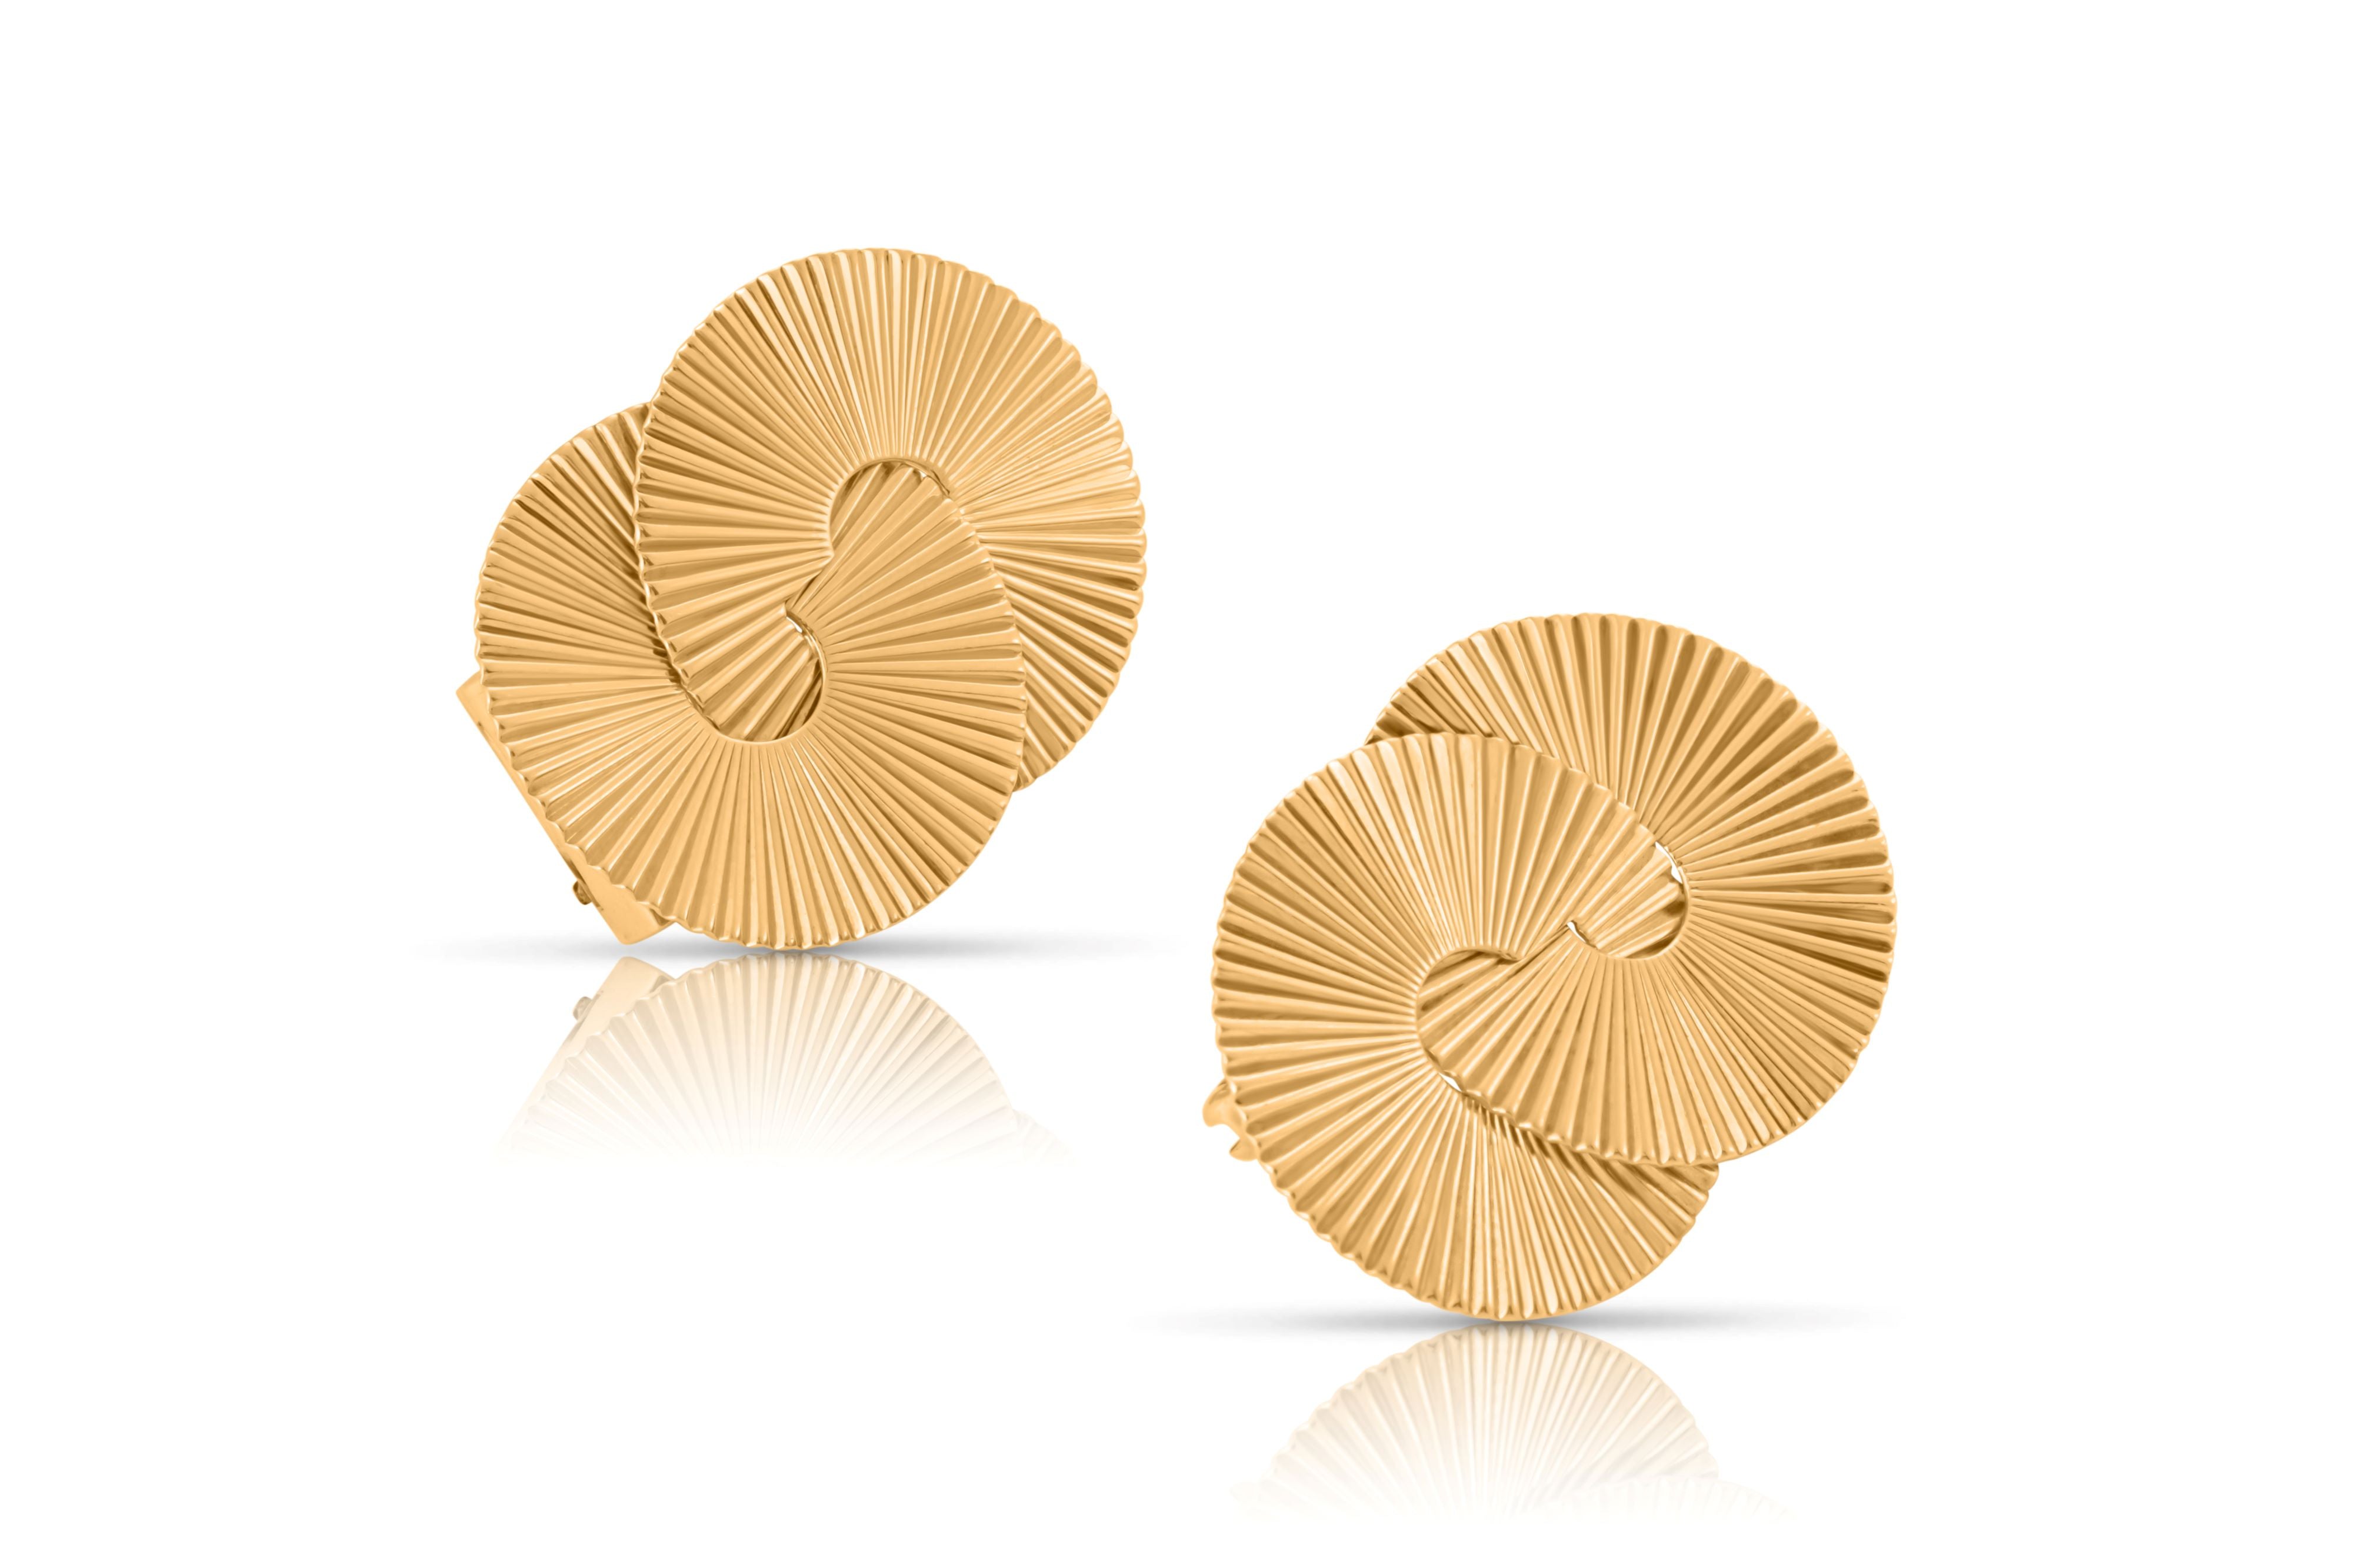 Retro 1950s pair of gold brooches shaped as interlocking circles.